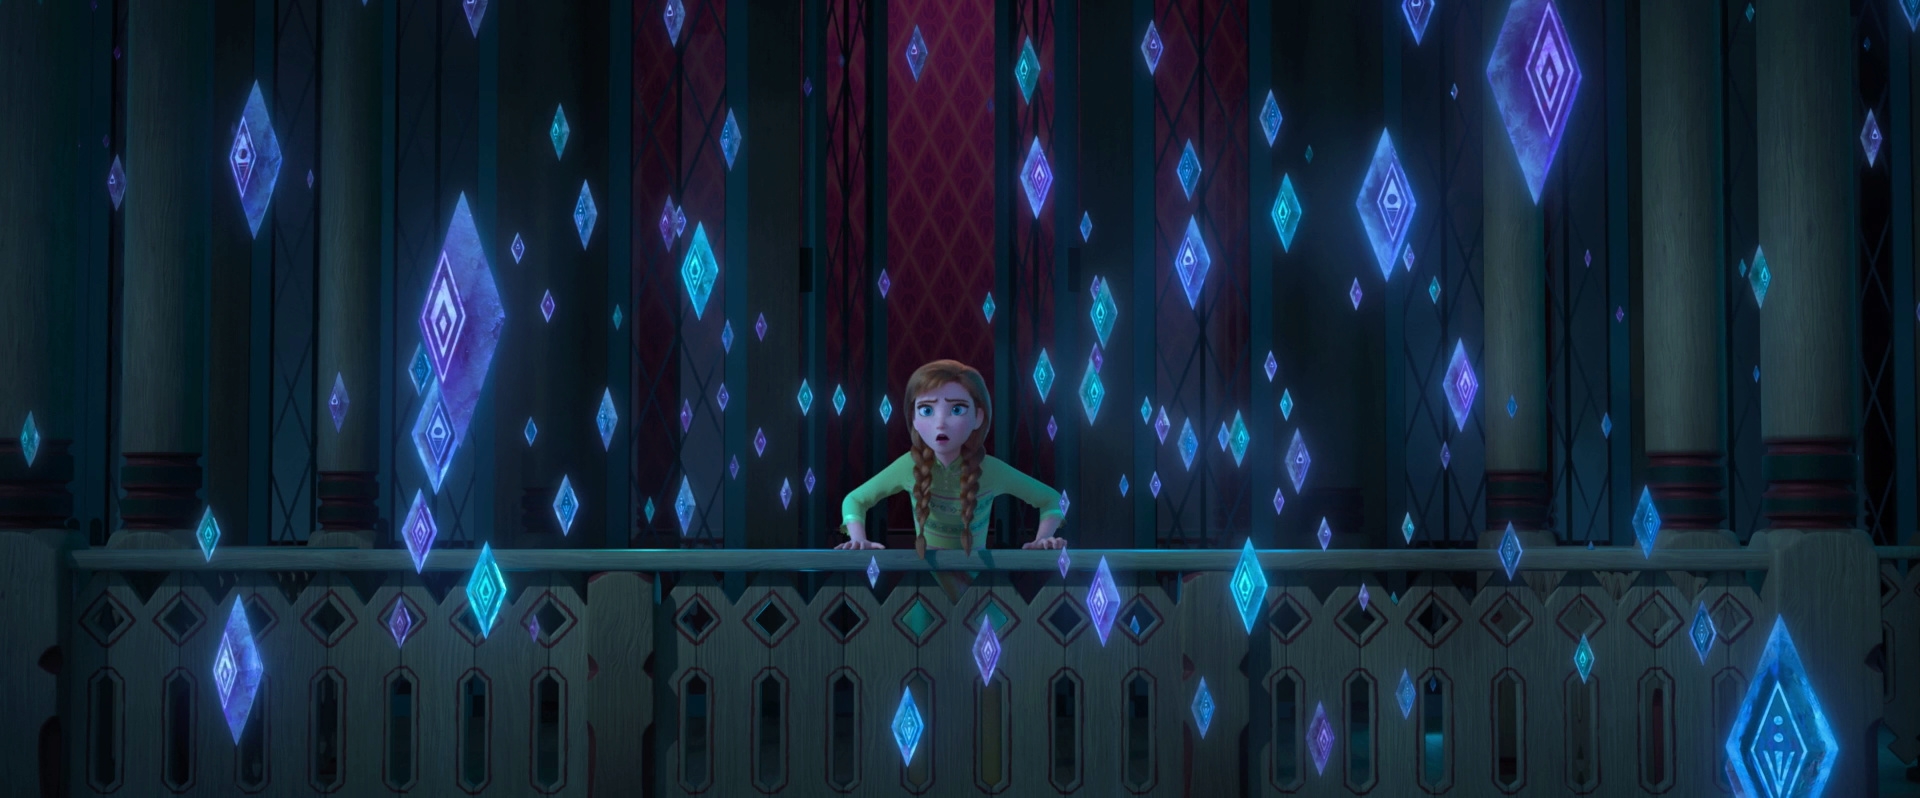  La Reine des Neiges II [Walt Disney Animation Studios - 2019] - Page 2 Vlcsna25